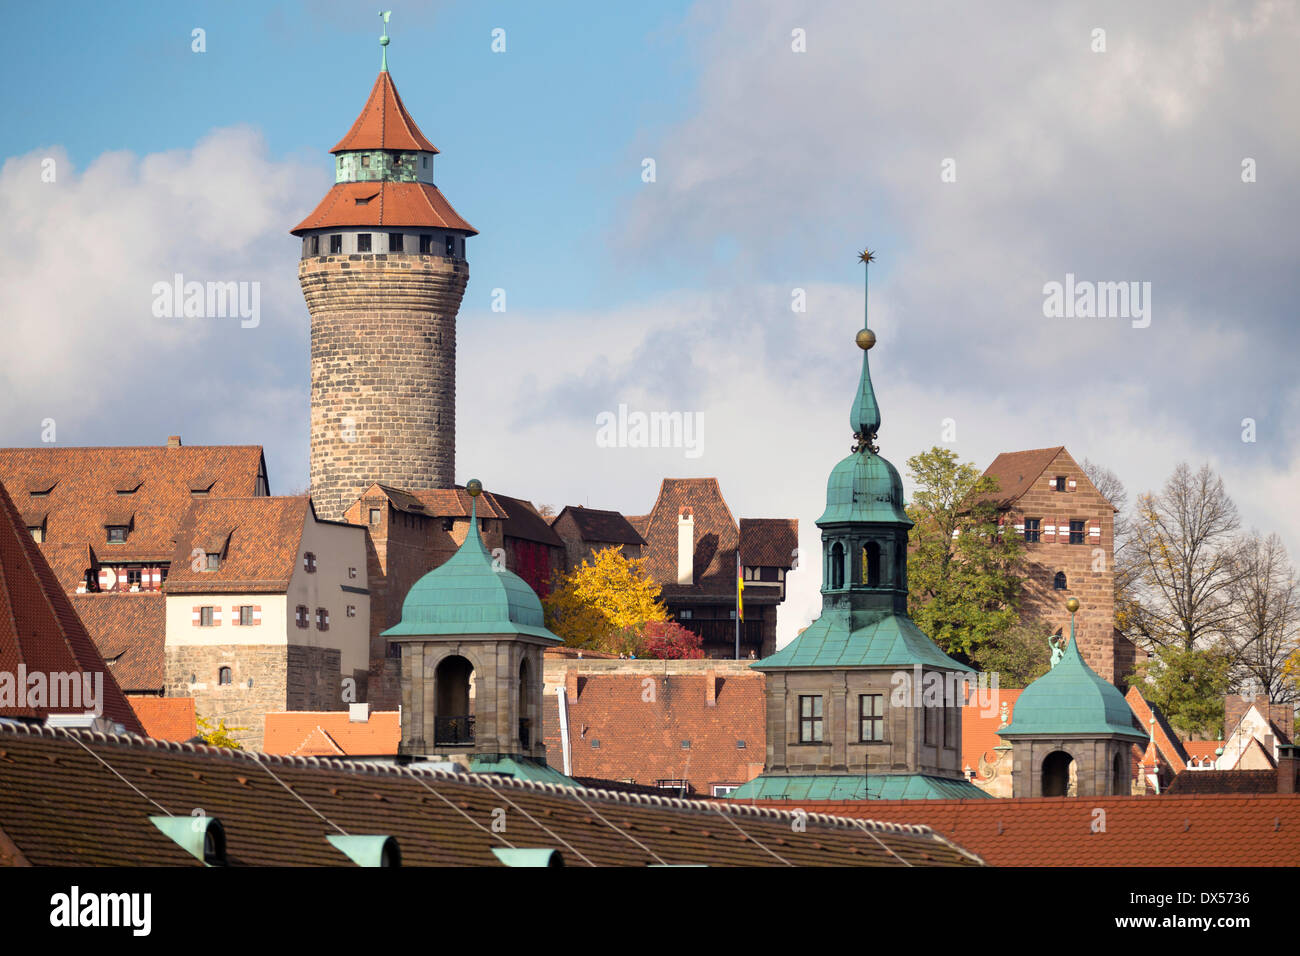 Sinwellturm Turm, Teil der Nürnberger Kaiserburg, Nürnberg, Mittelfranken, Franken, Deutschland Stockfoto